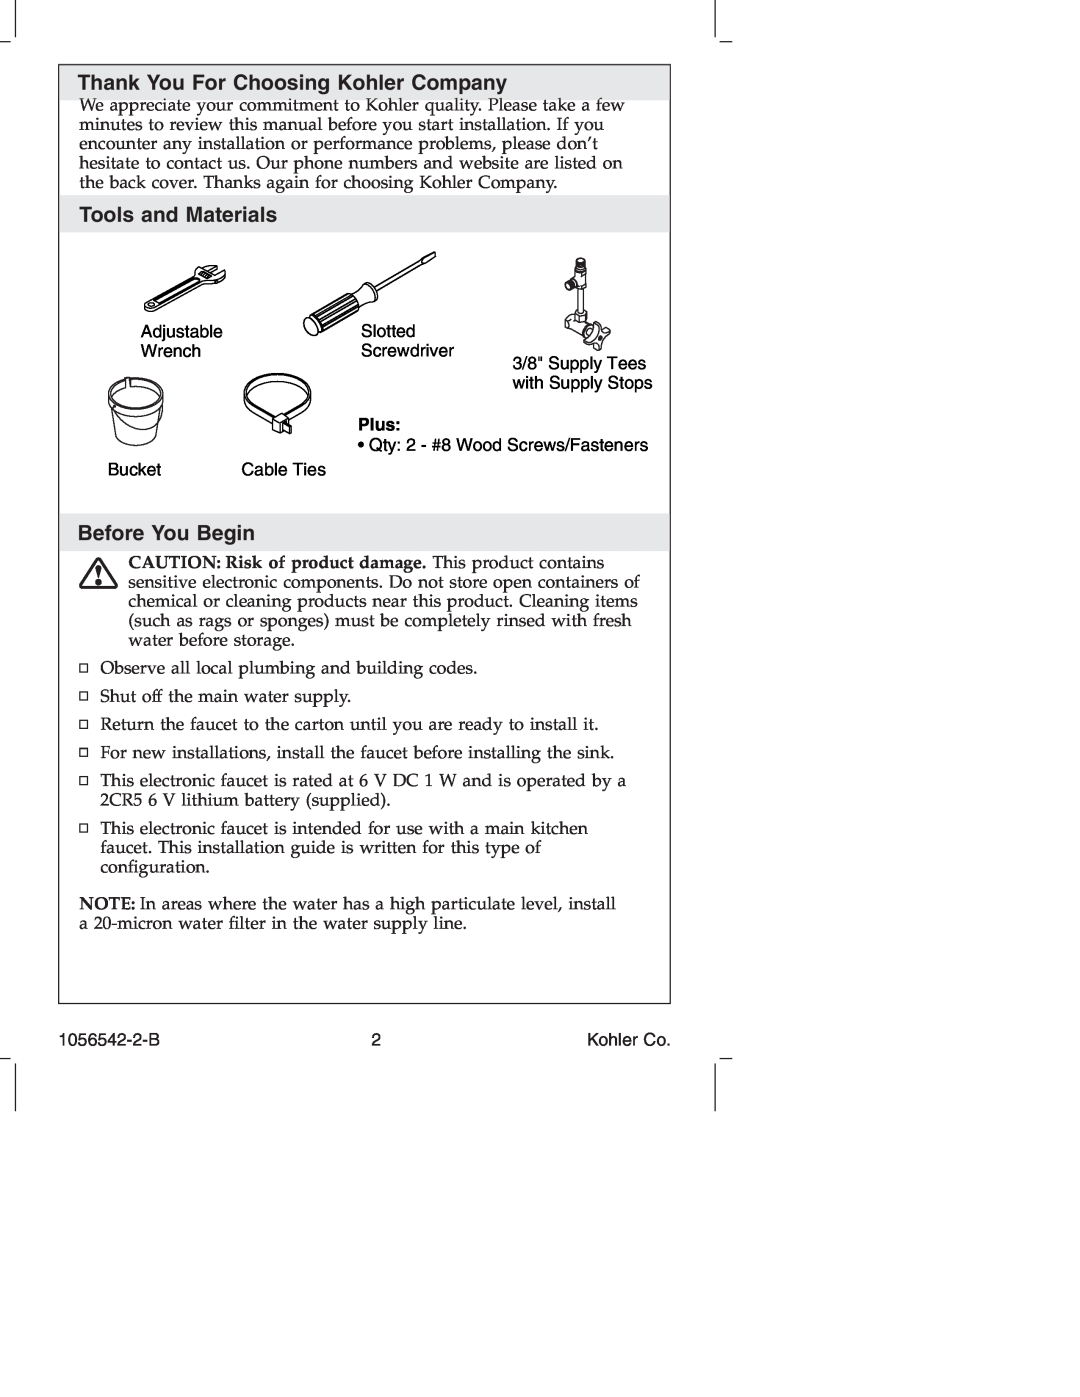 Kohler K-10104, K-10103 manual Thank You For Choosing Kohler Company, Tools and Materials, Before You Begin, Plus 